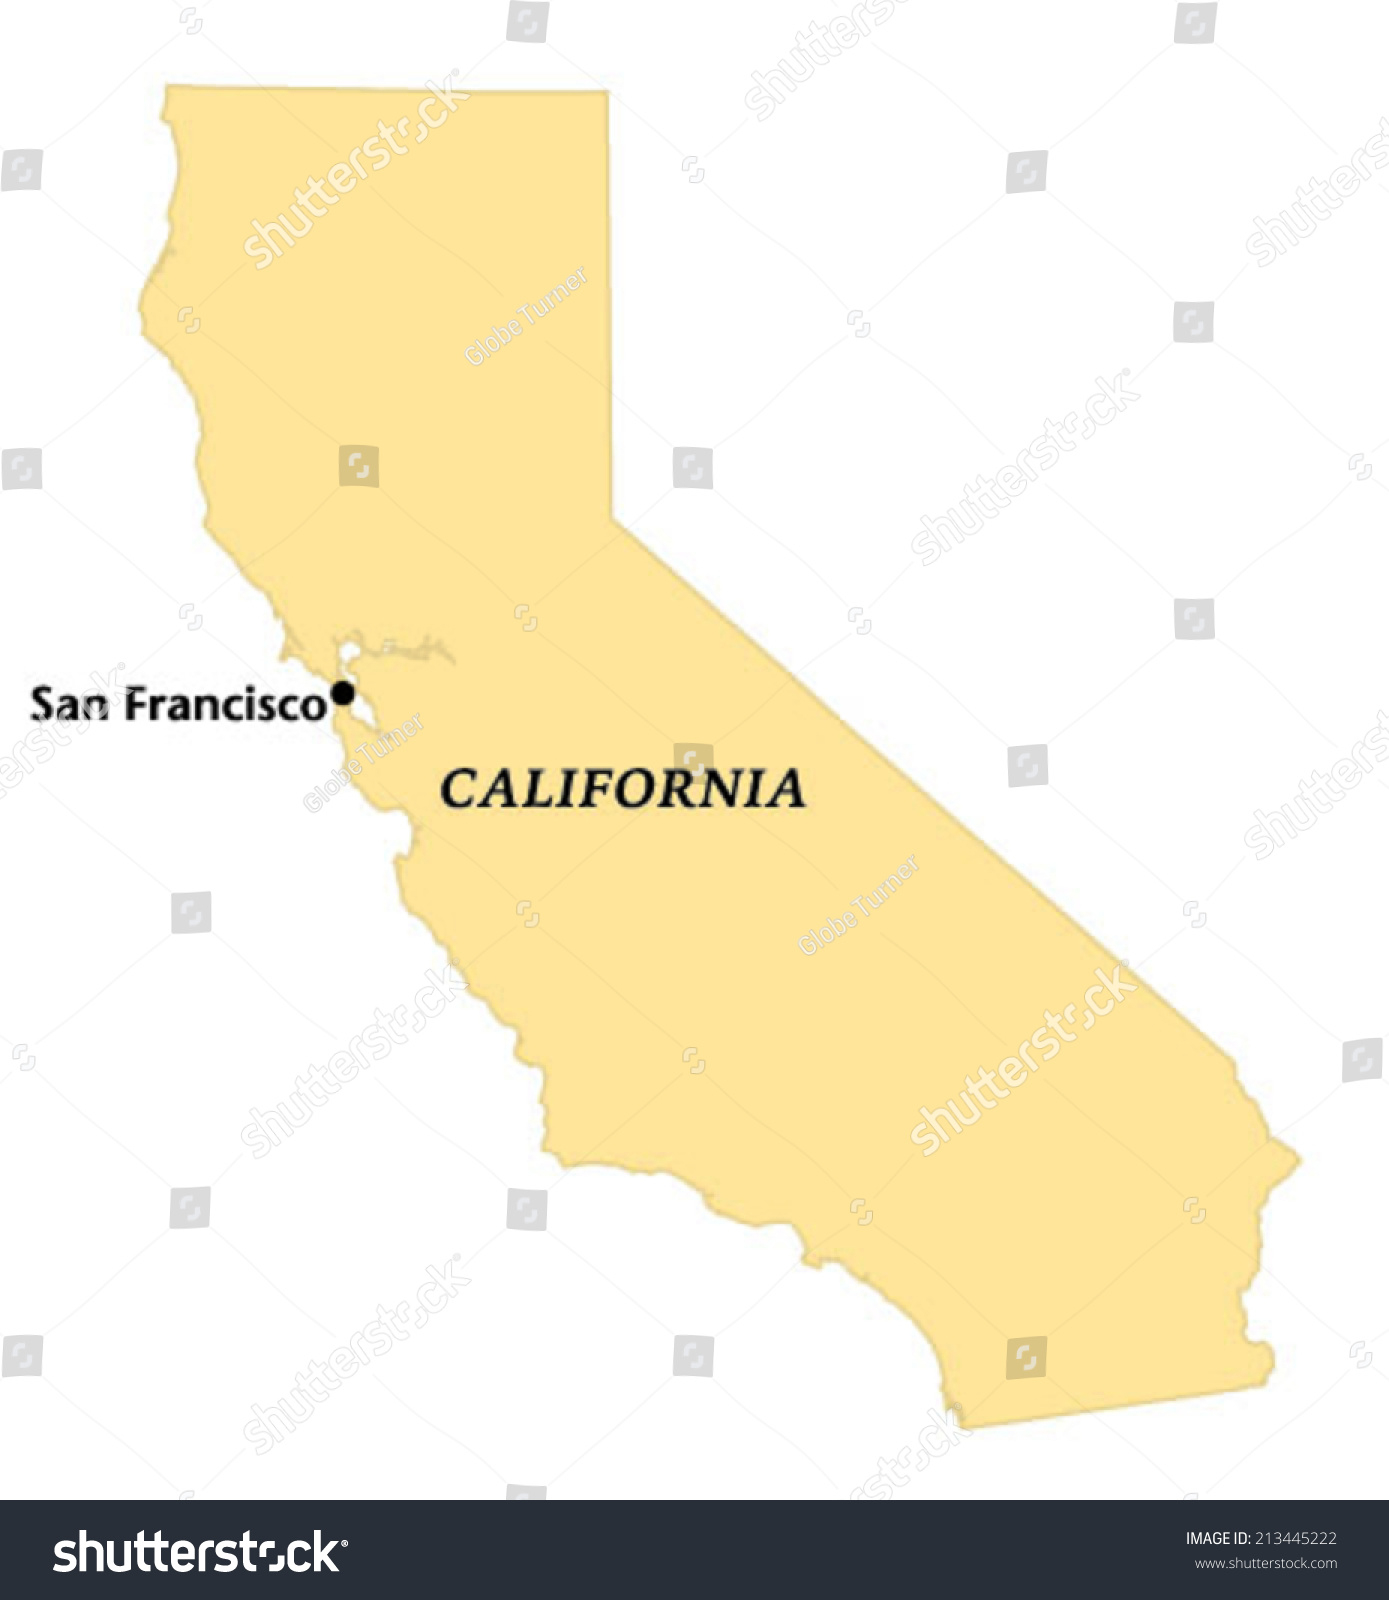 San Francisco California Map From Art En Provence 2 - Ameliabd - A Map Of San Francisco California